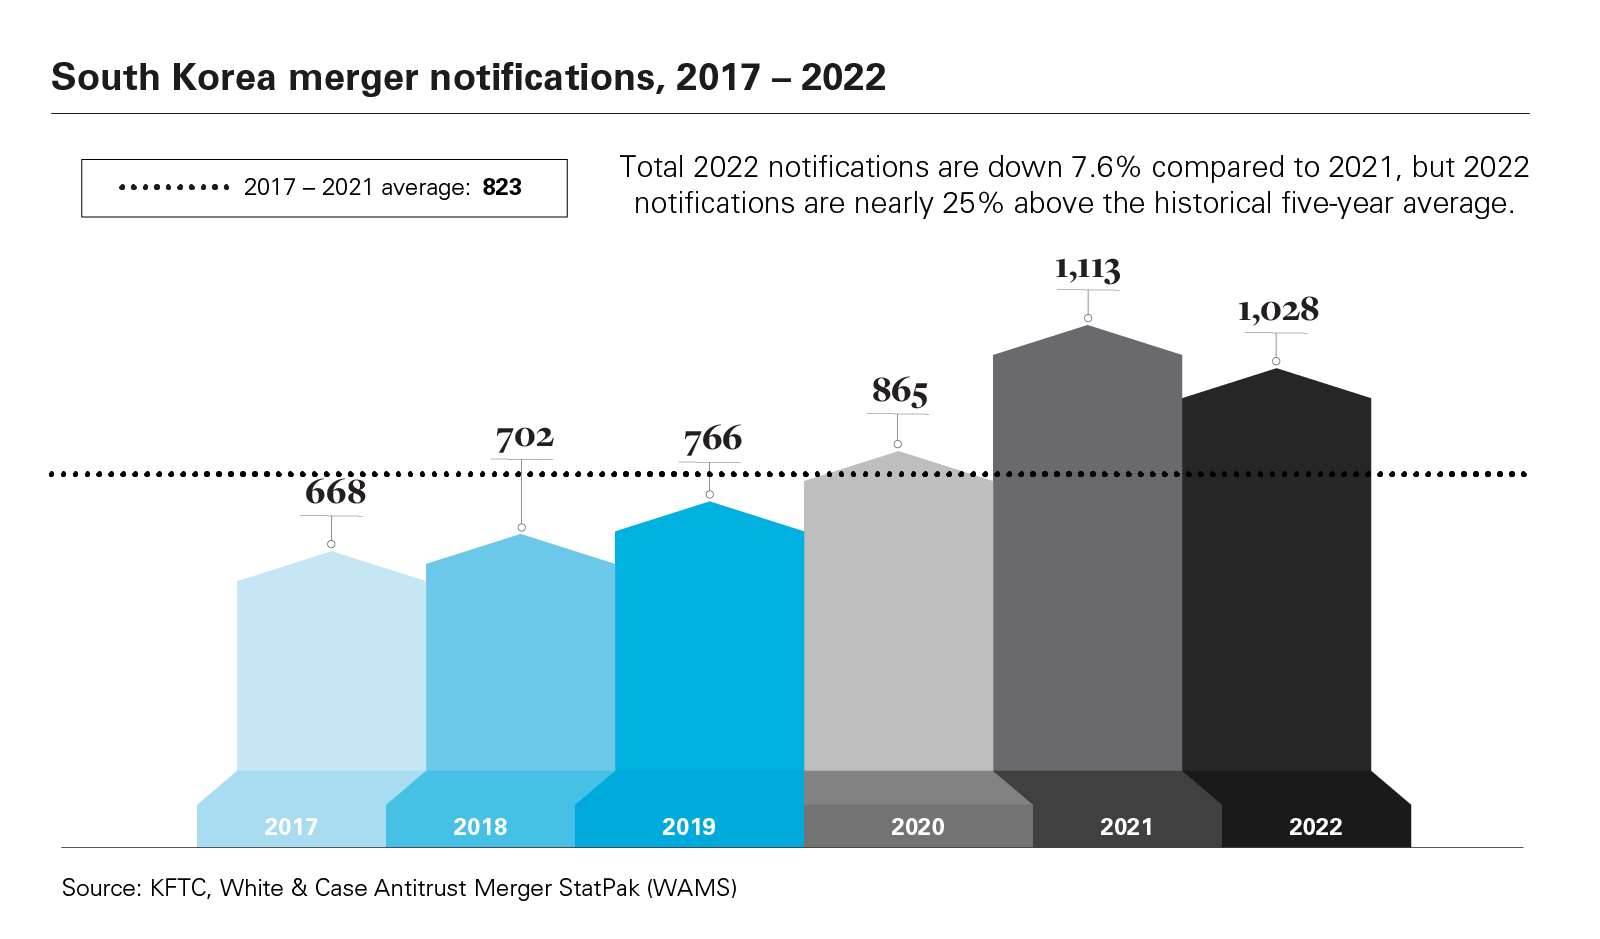 South Korea merger notifications, 2017 - 2022 graph